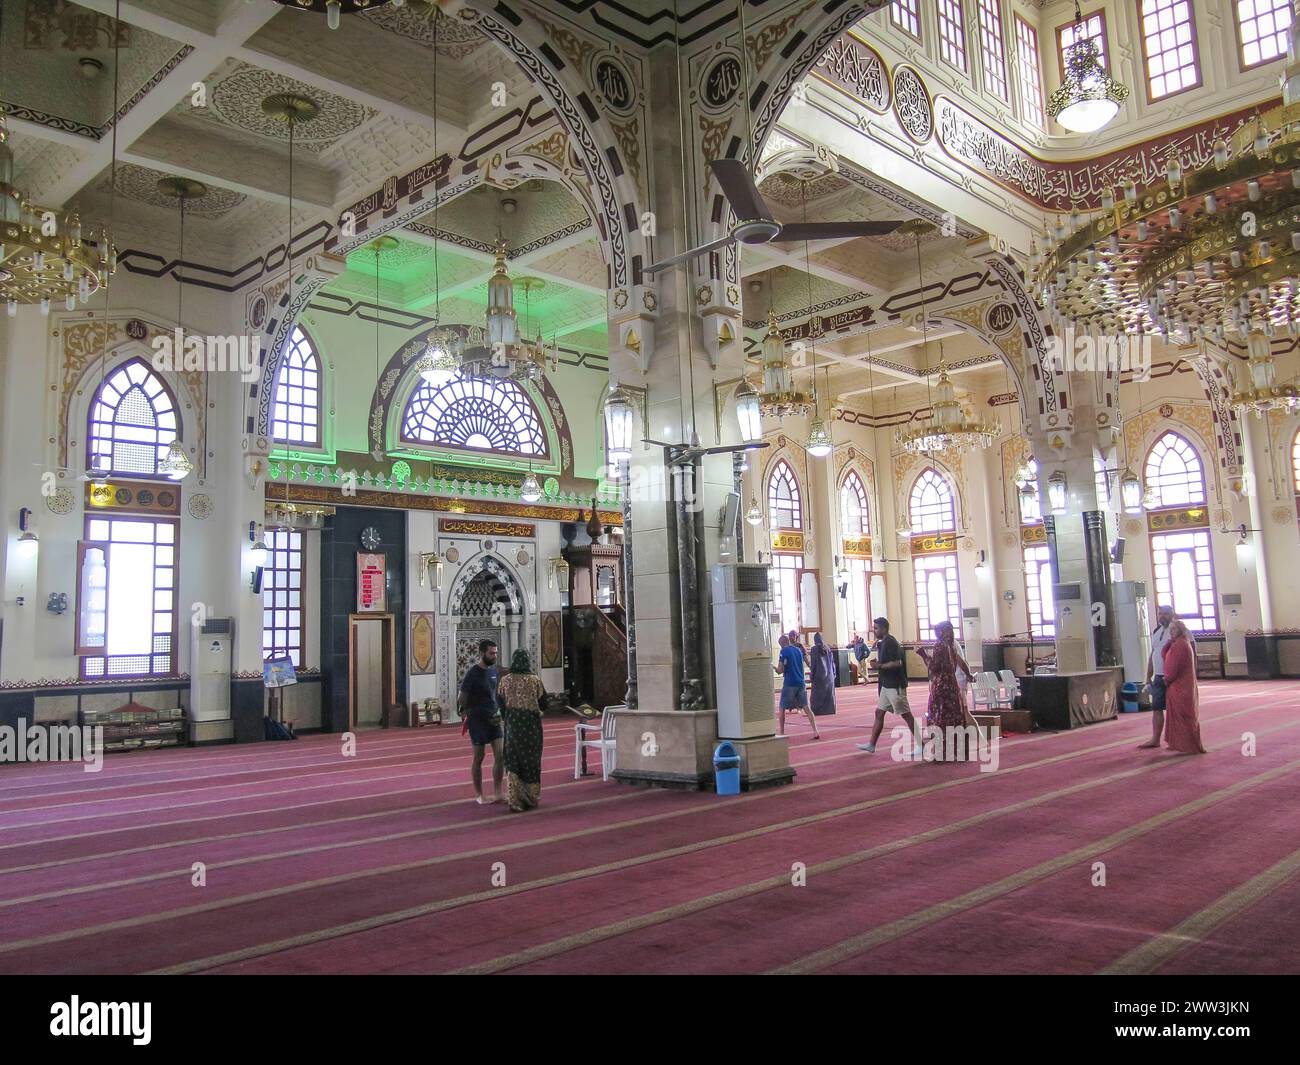 Al Mina Mosque, Hurghada, Egypt Stock Photo